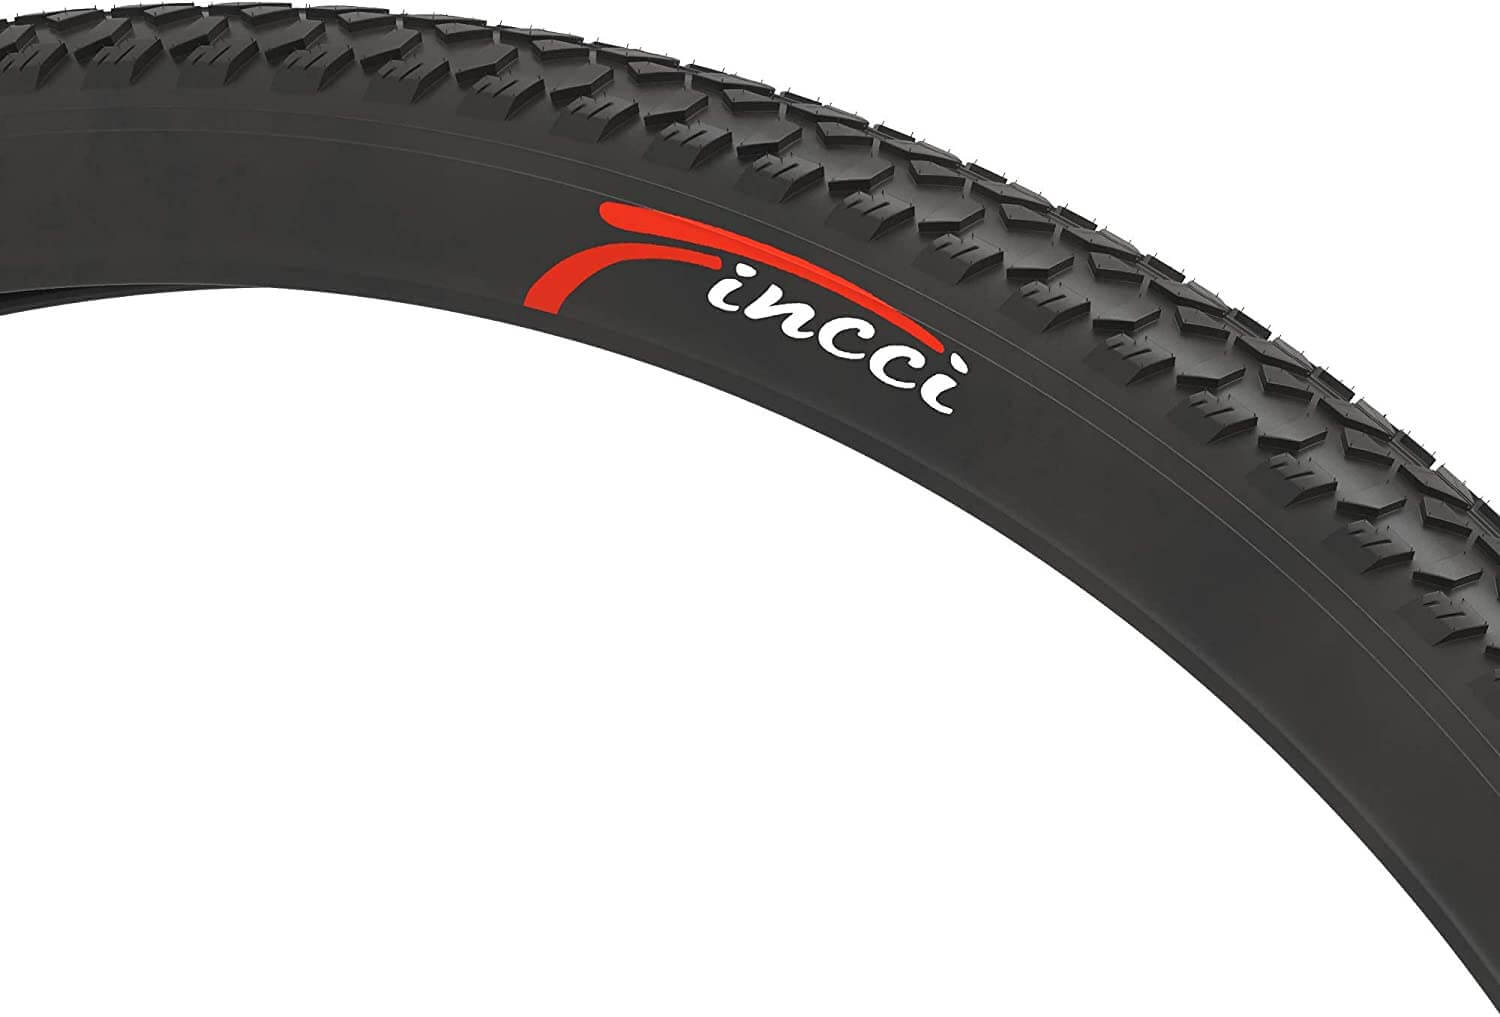 Fincci Pair 26 x 4.0 Inch 100-559 Fat Tyres for Road Mountain MTB Mud Dirt Bike 